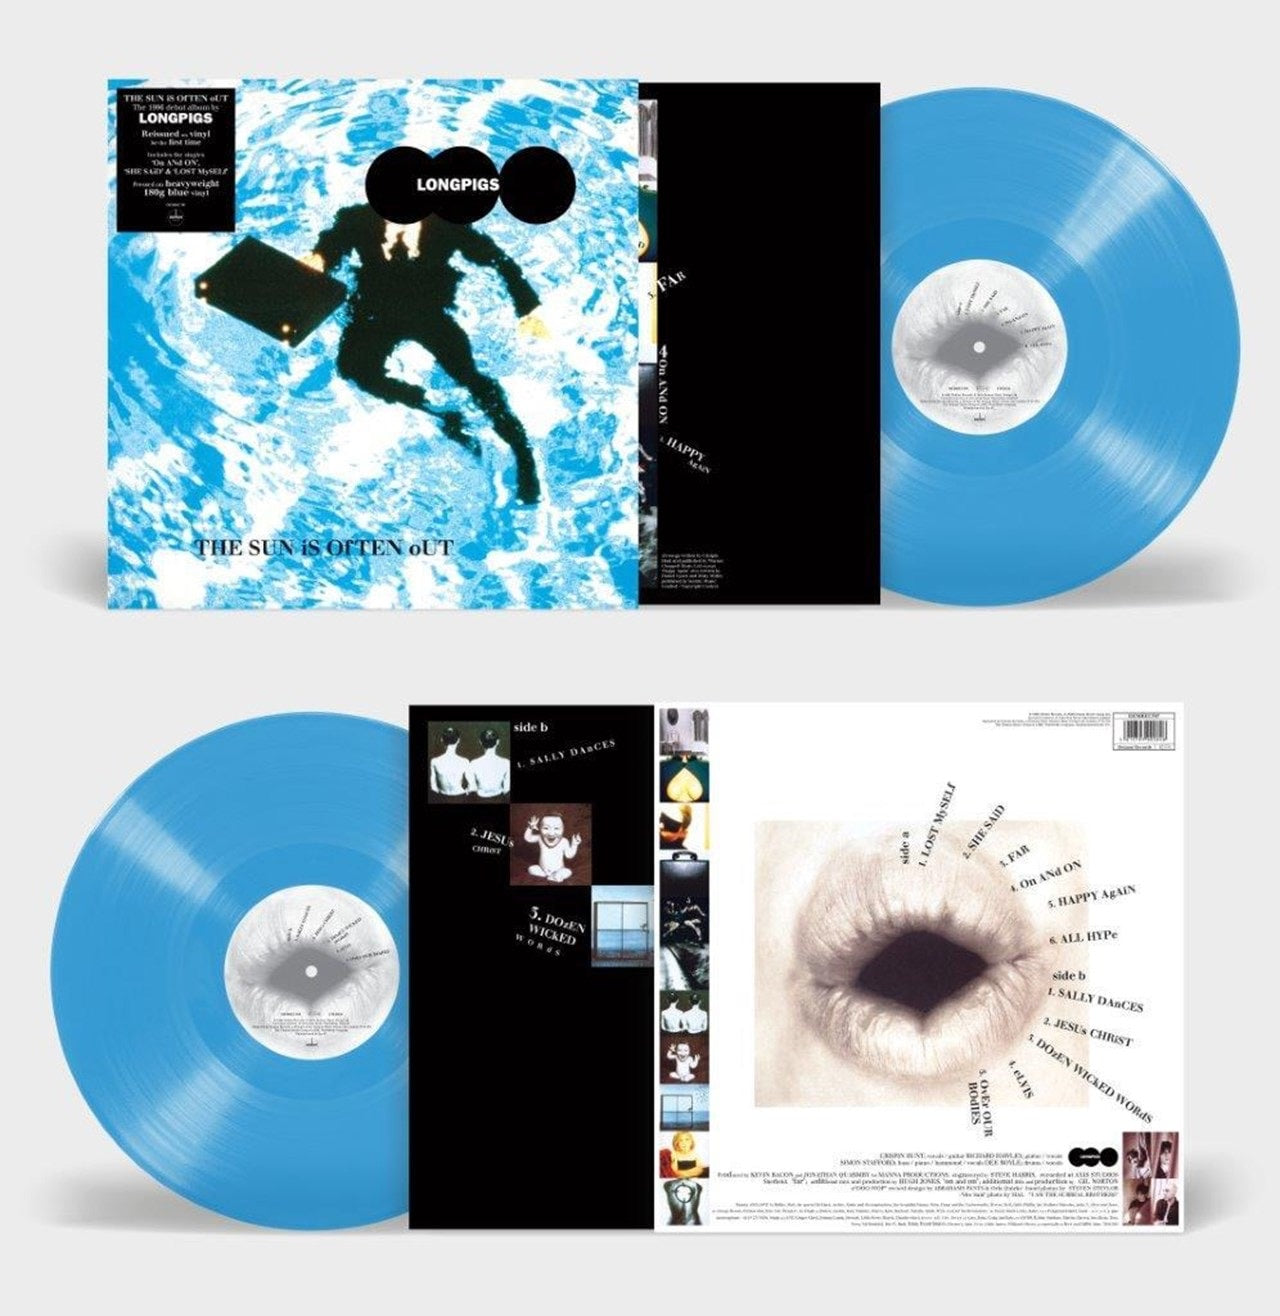 Longpigs - The Sun Is Often Out (Blue Vinyl)